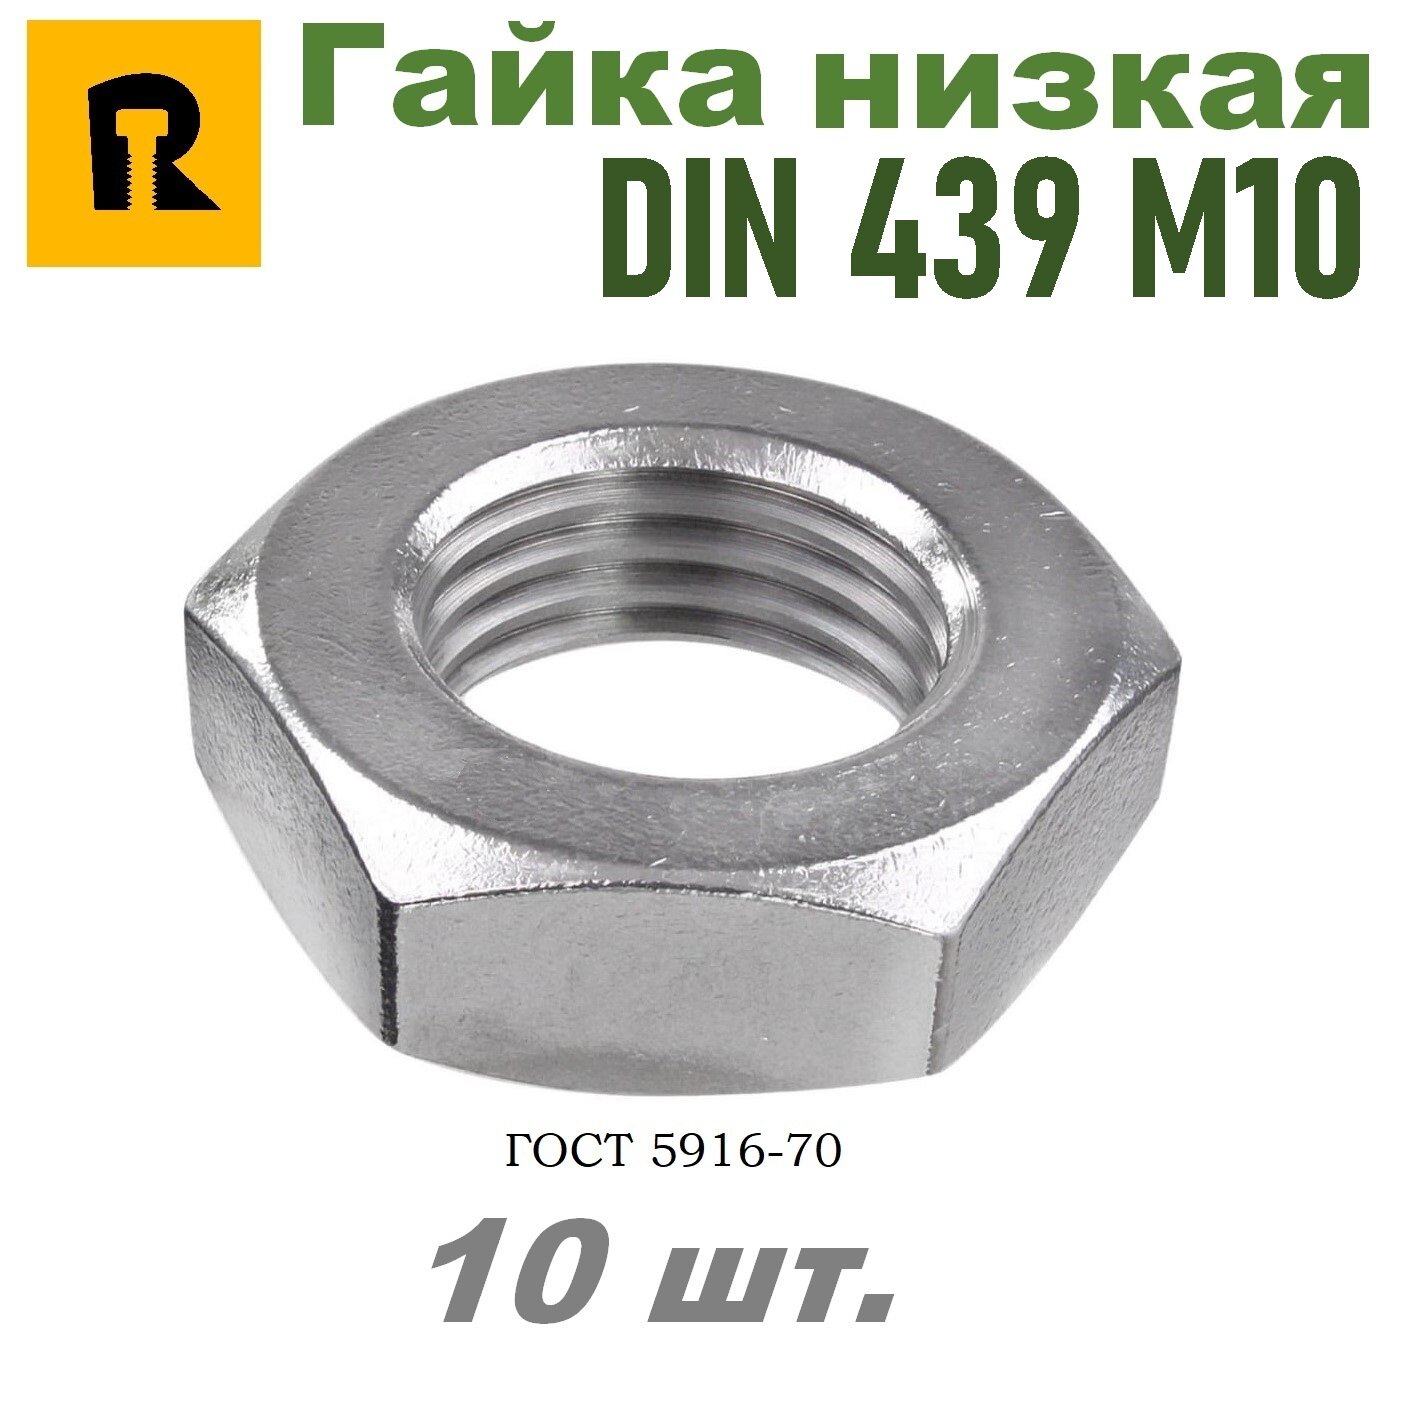 Гайка М10 DIN 439 (ГОСТ 5916-70) низкая кп 4,0 10 шт.